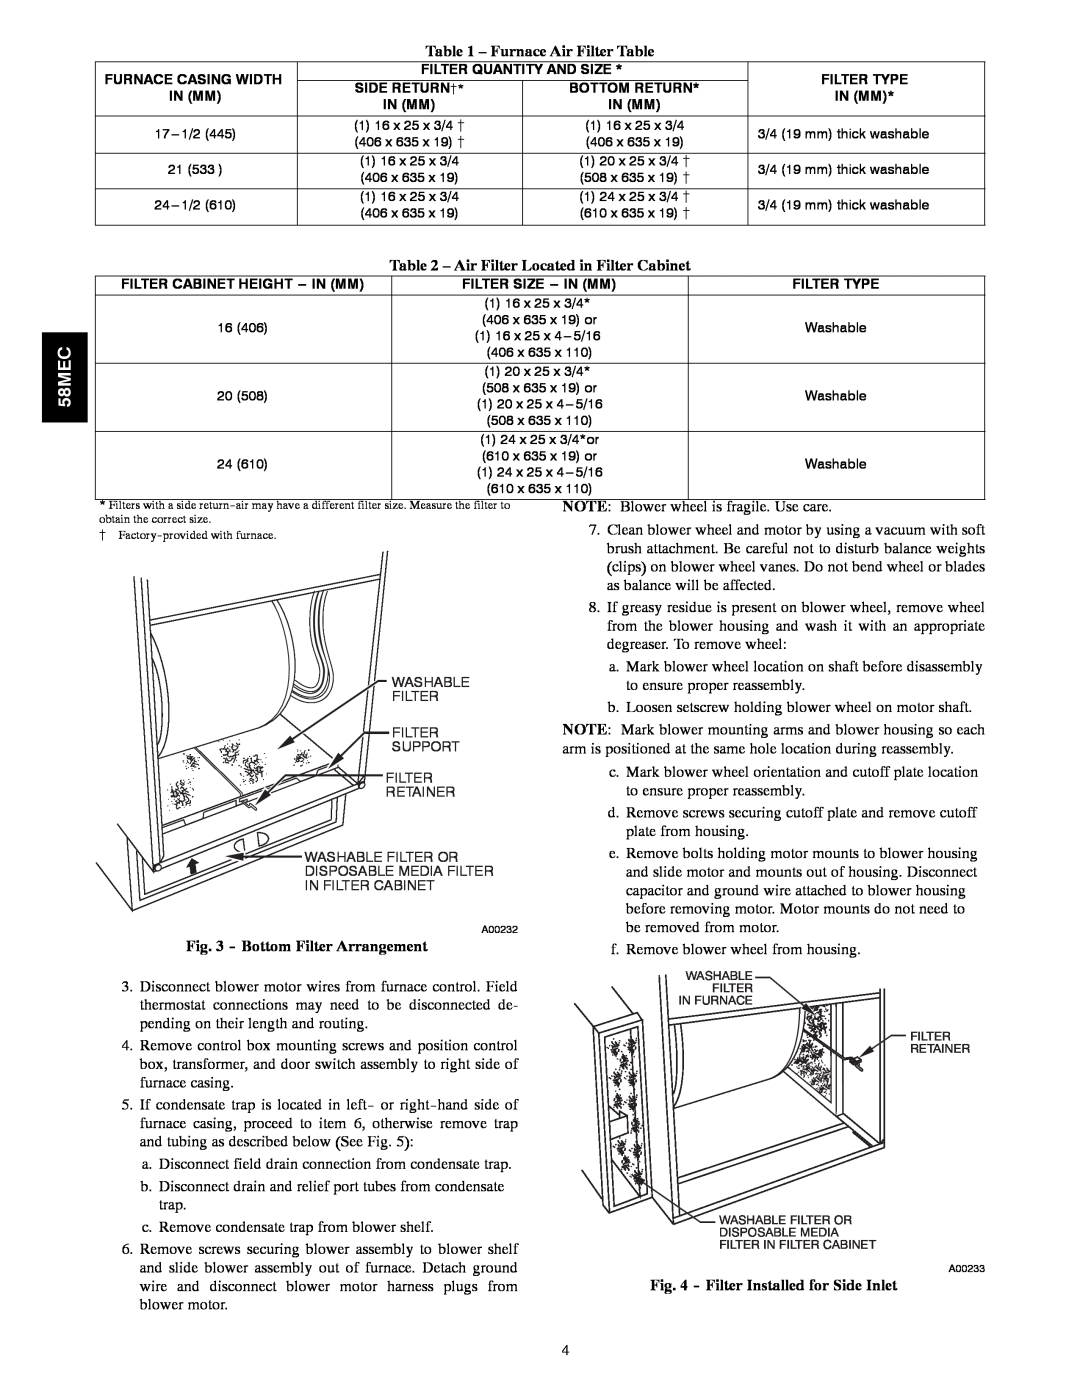 Carrier 58MEC instruction manual Furnace Air Filter Table, Air Filter Located in Filter Cabinet, Bottom Filter Arrangement 